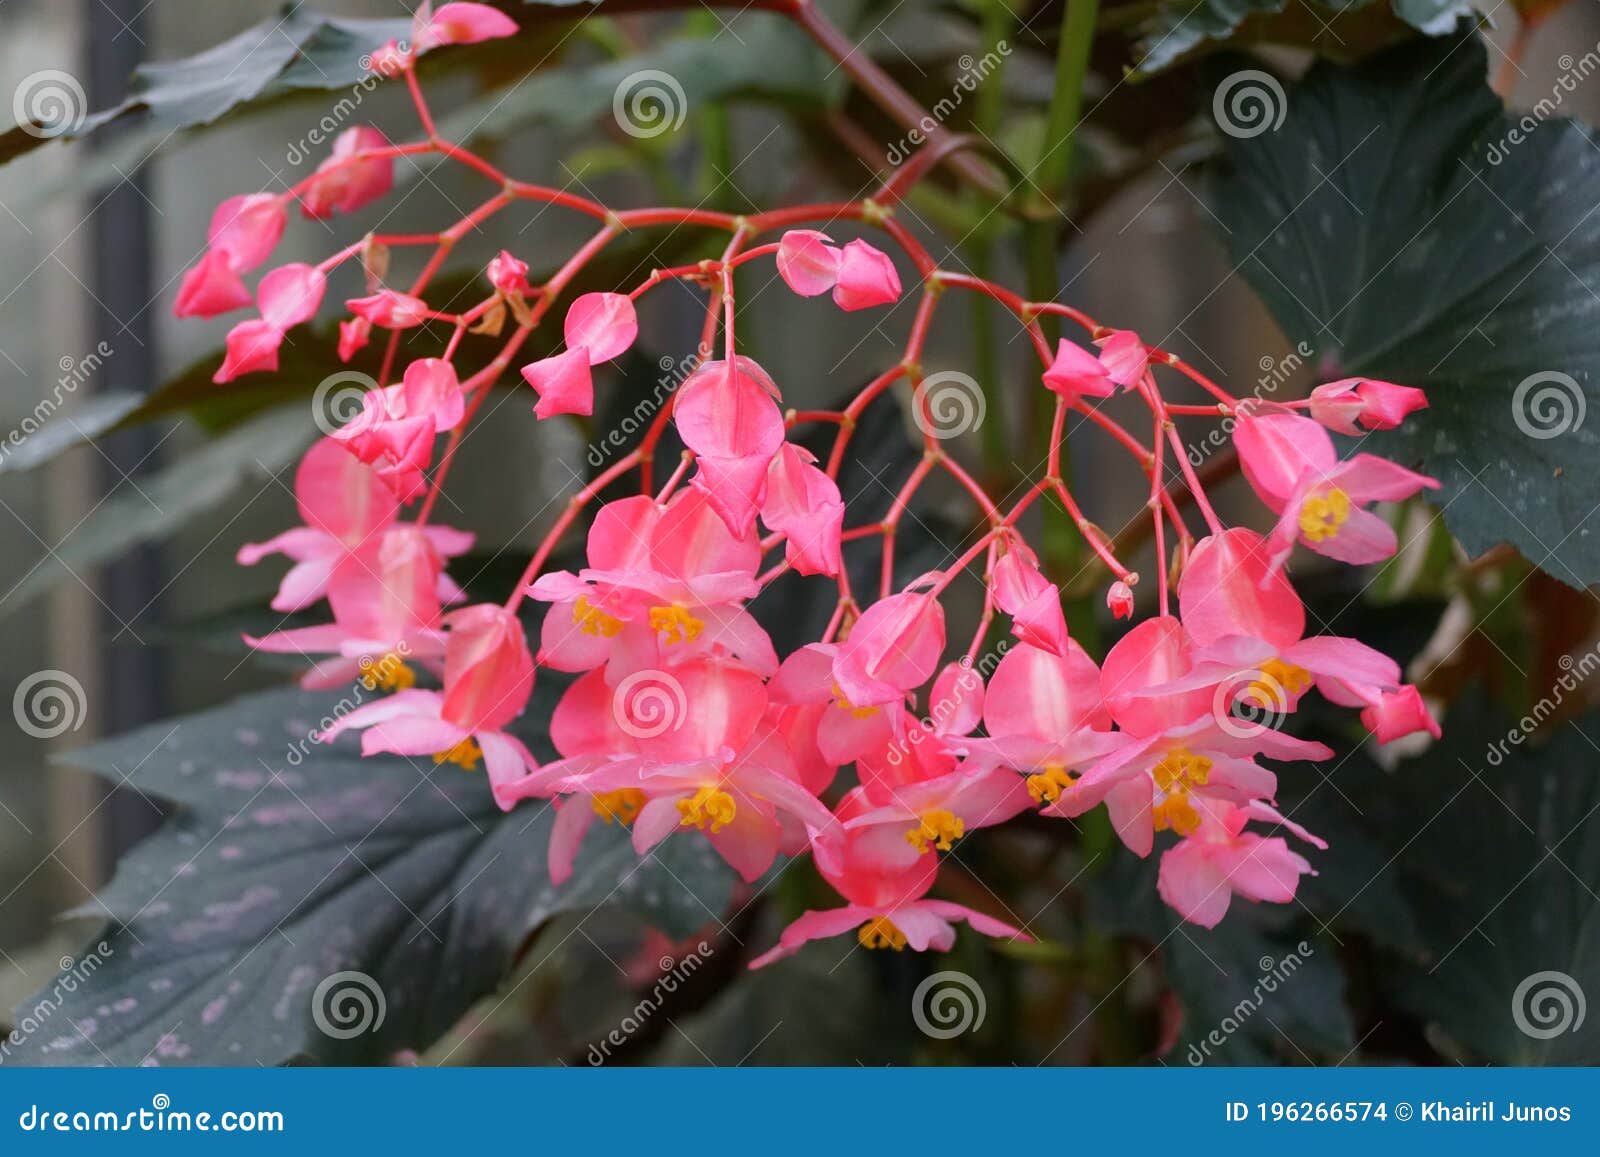 cane-like begonia `lana` pink flowers